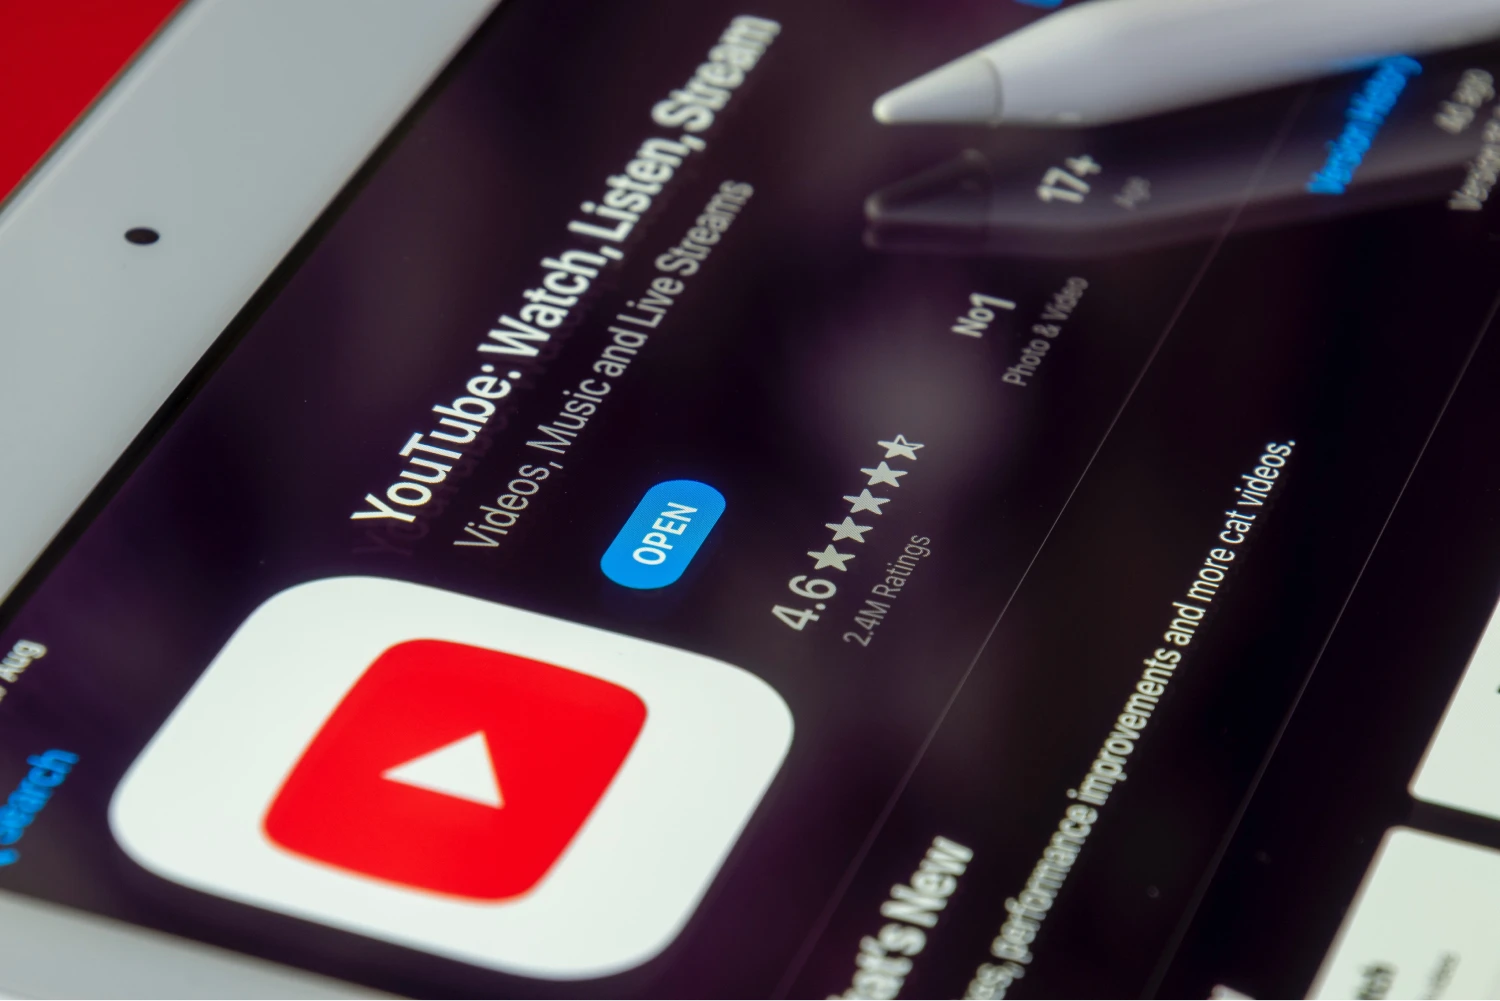  Disfruta del mejor contenido digital compartiendo YouTube Premium Familiar